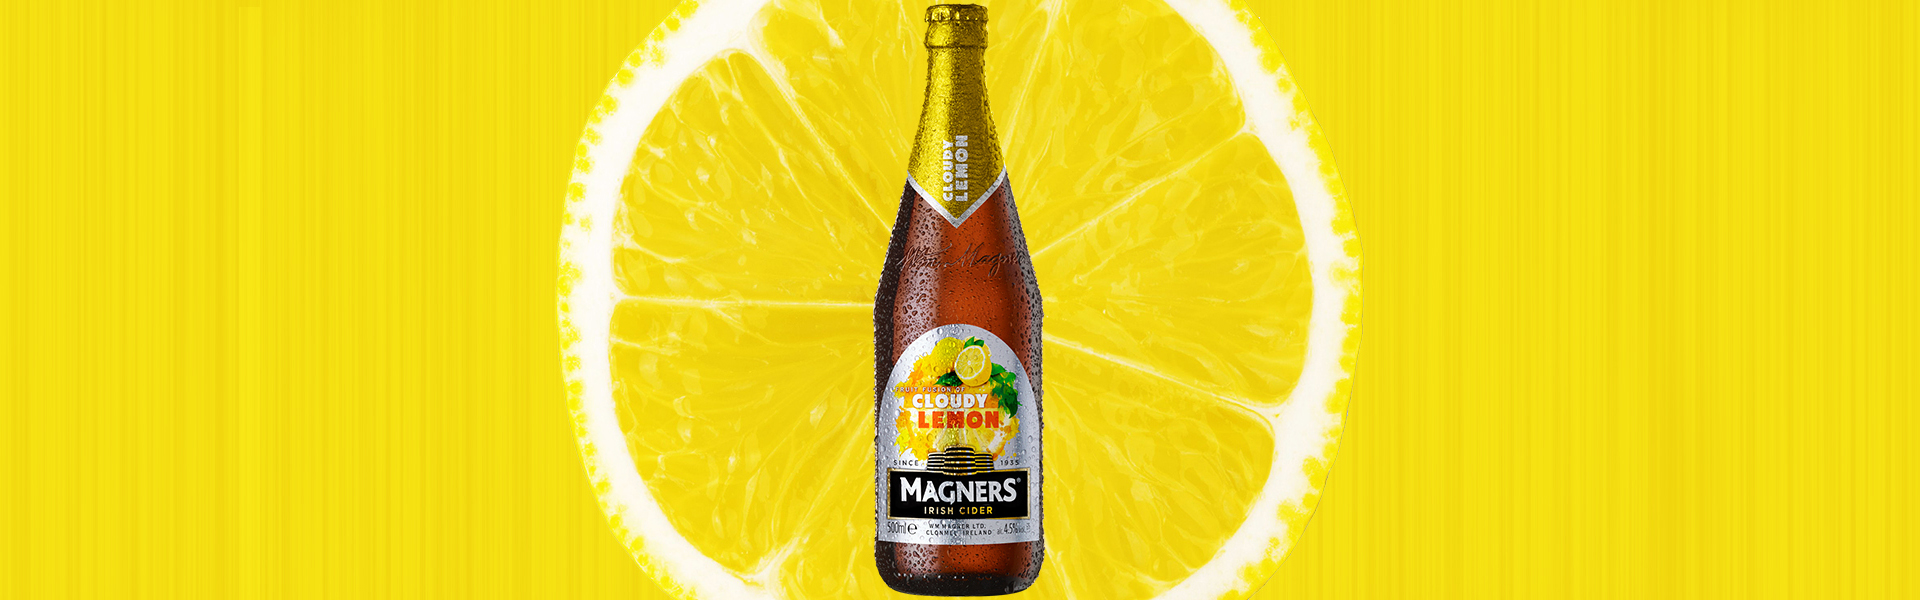 Ny frisk citroncider från Irland – Magners Cloudy Lemon släpps på Systembolaget